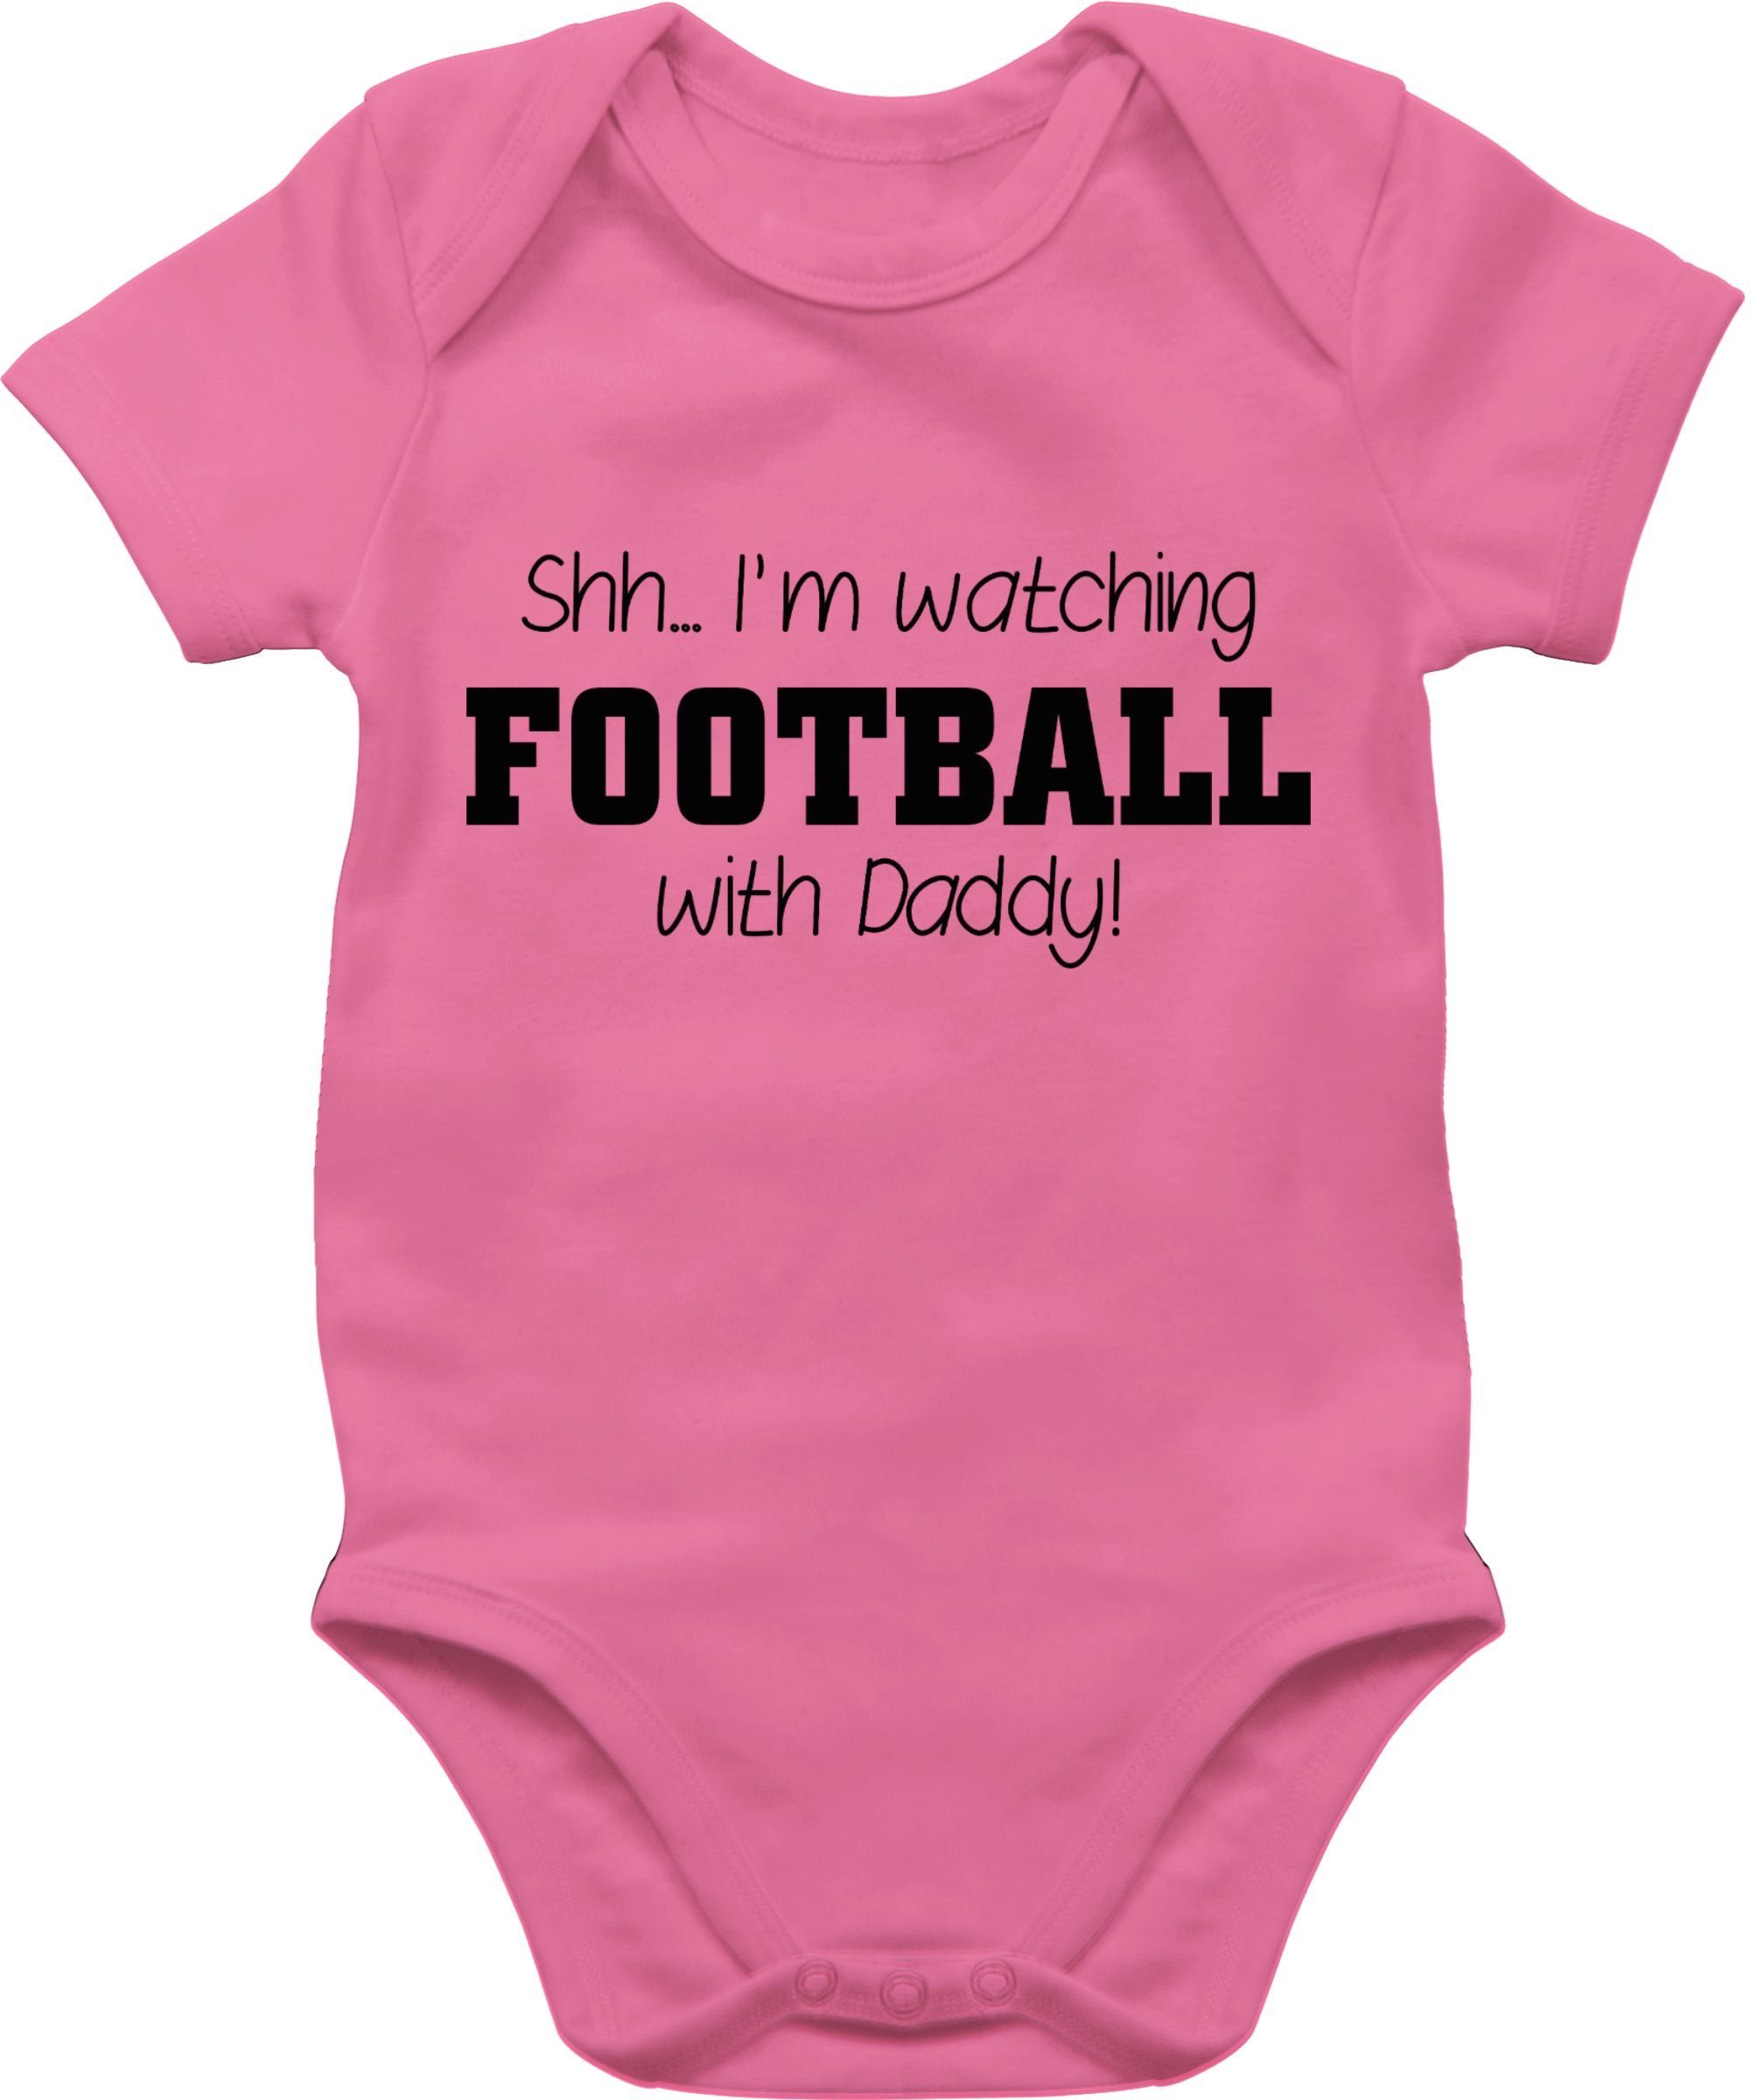 Shirtracer Shirtbody Shh...I'm watching football with Daddy! - schwarz Sport & Bewegung Baby 2 Pink